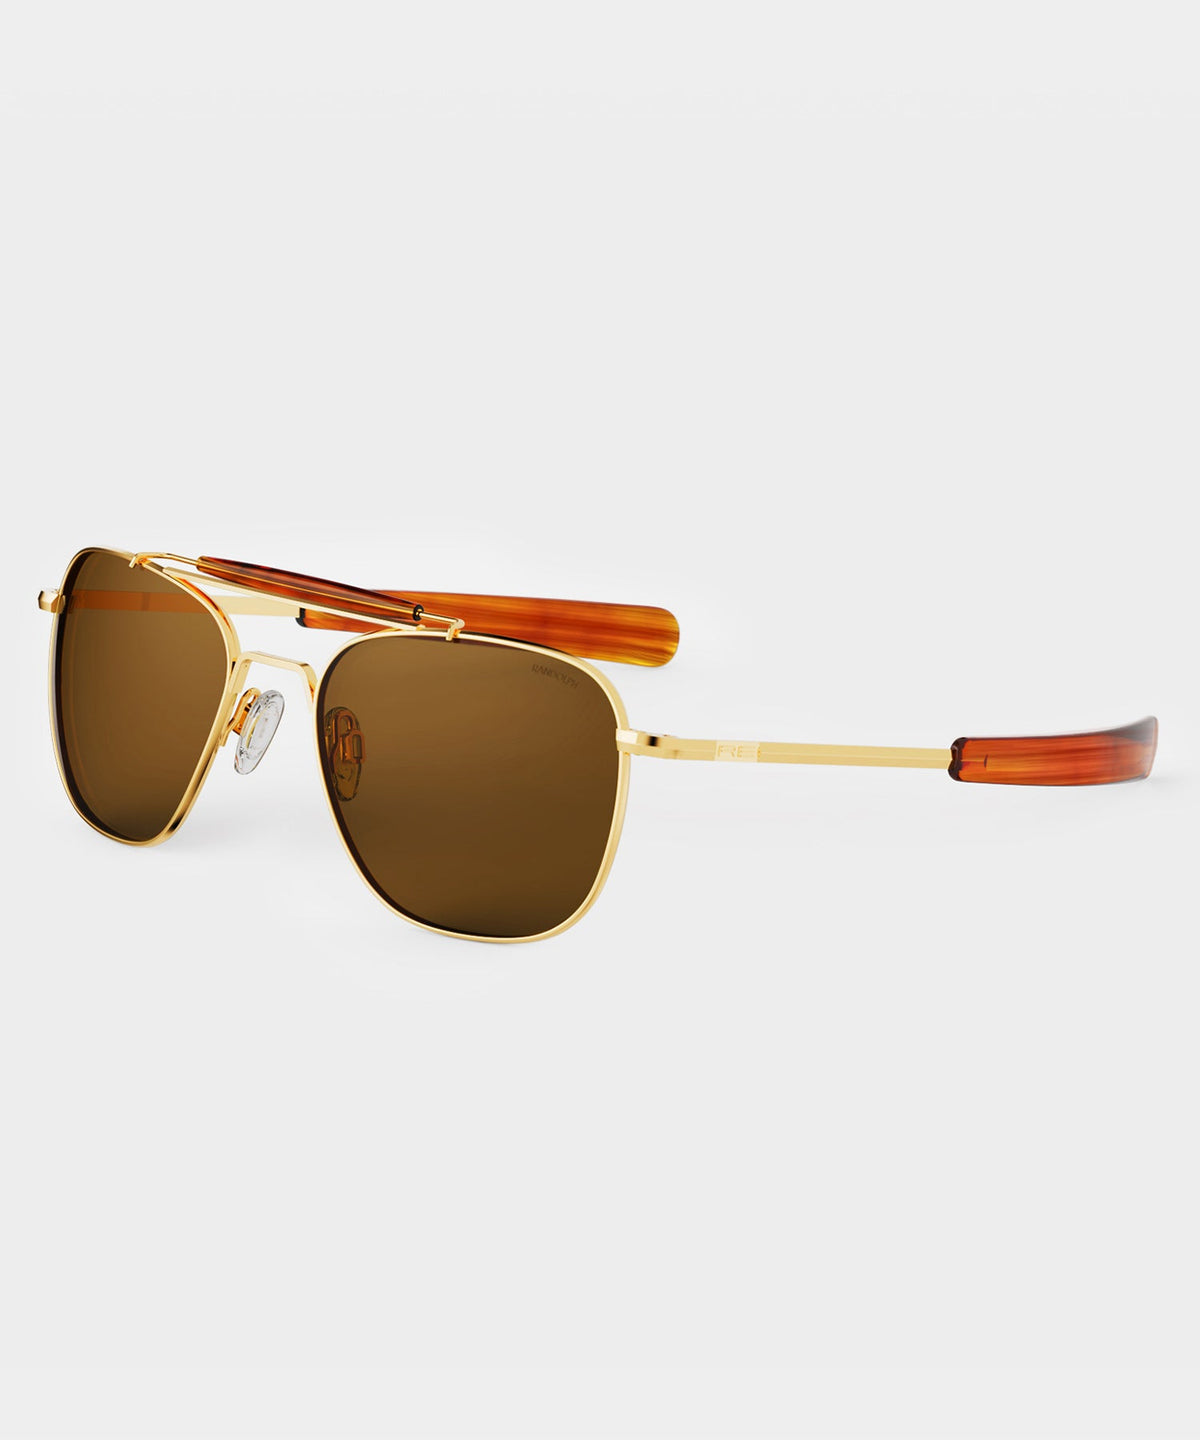 Randolph Glass Polarized Sunglasses in American Tan - 23k Gold